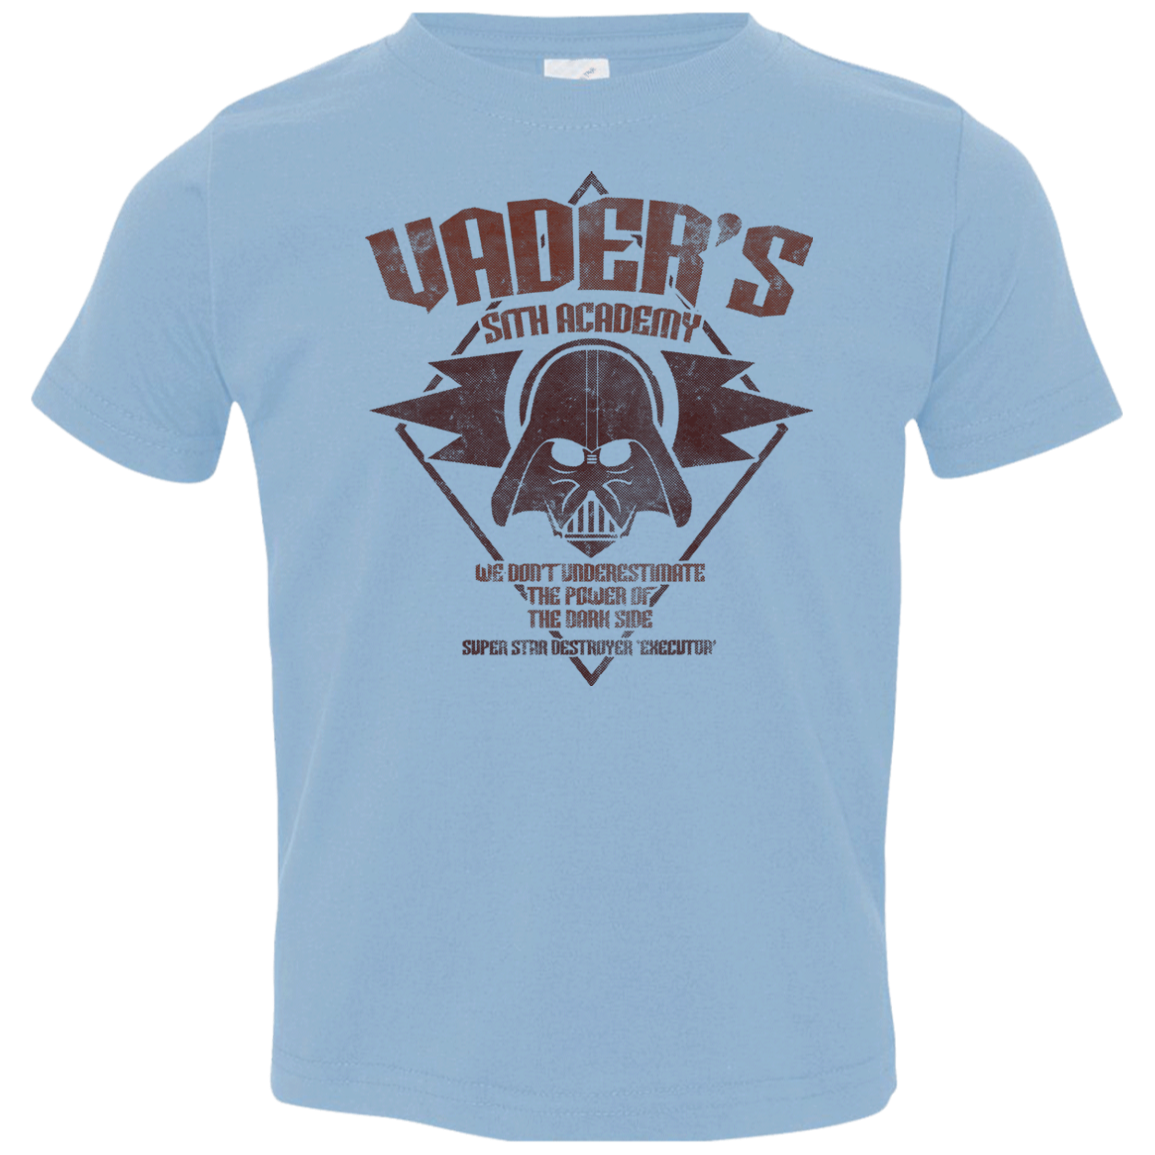 Vader Academy Toddler Premium T-Shirt